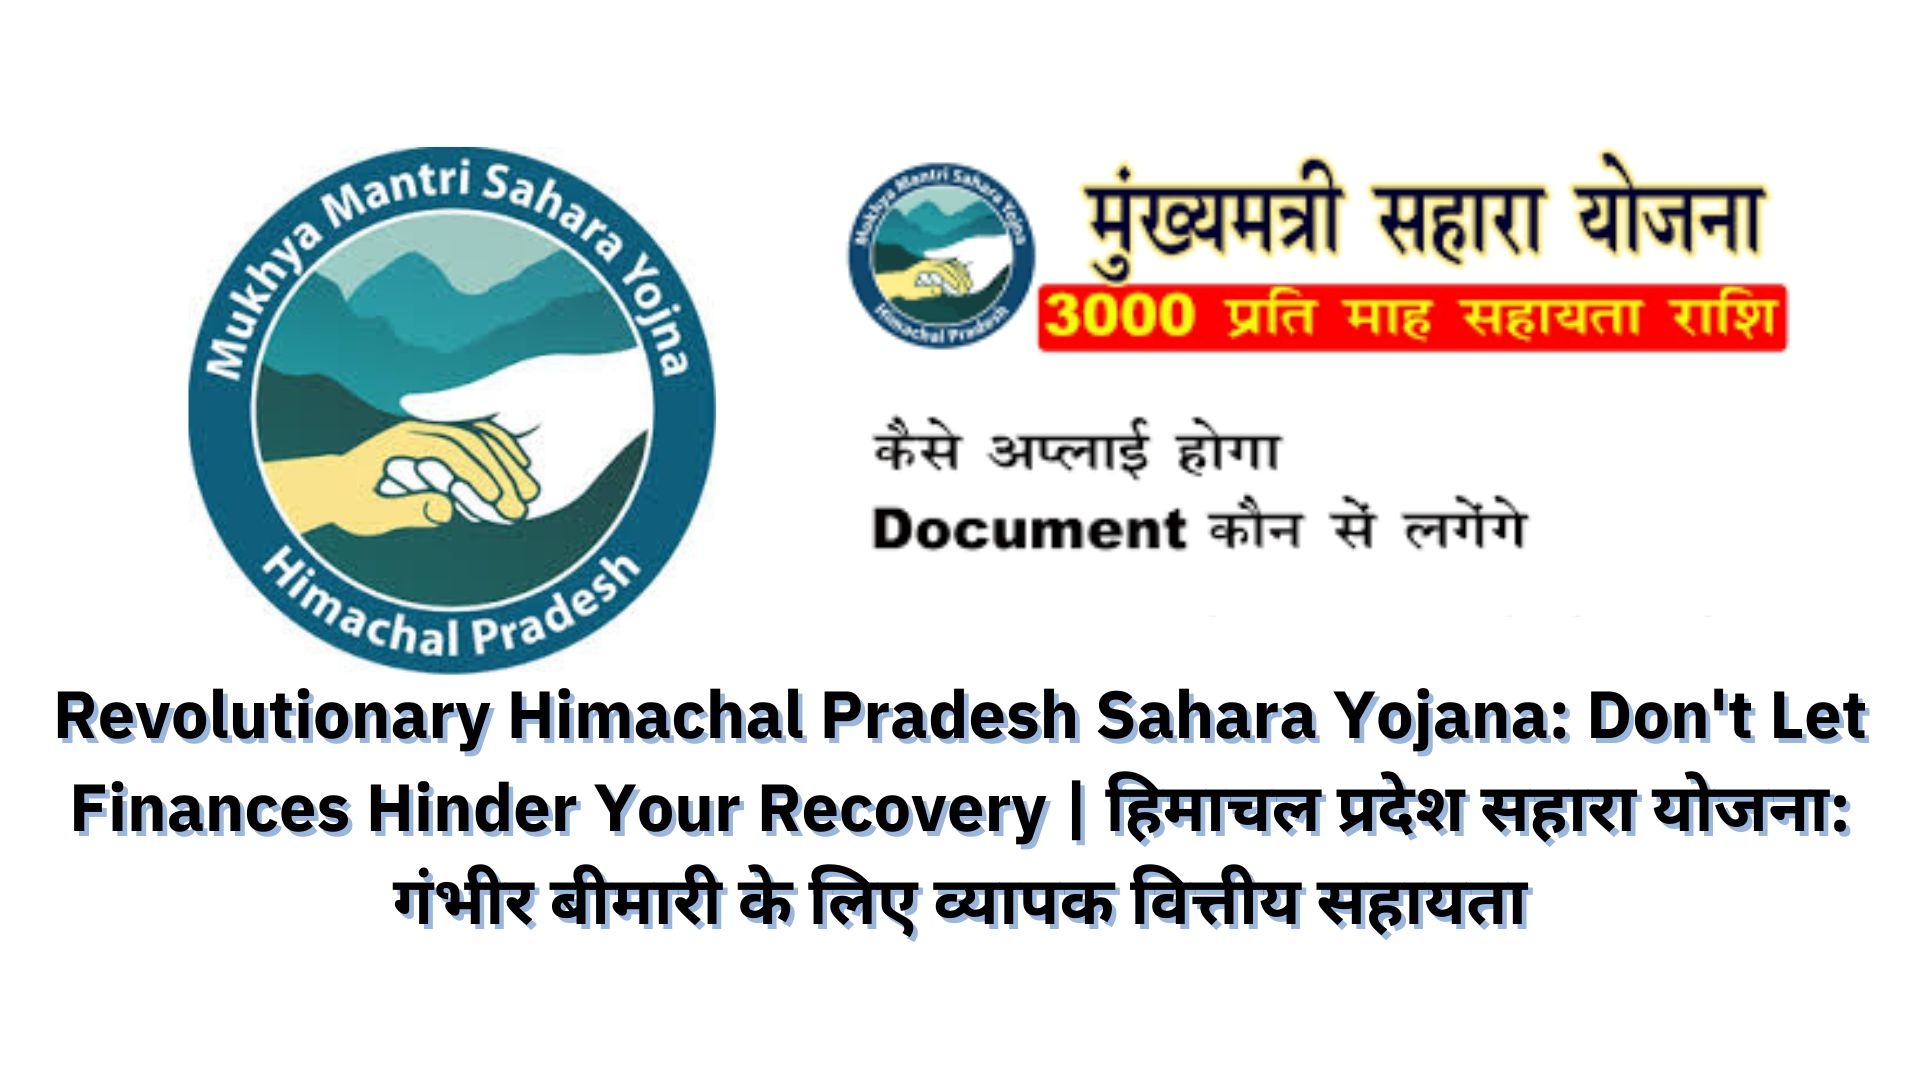 Revolutionary Himachal Pradesh Sahara Yojana: Don't Let Finances Hinder Your Recovery | हिमाचल प्रदेश सहारा योजना: गंभीर बीमारी के लिए व्यापक वित्तीय सहायता